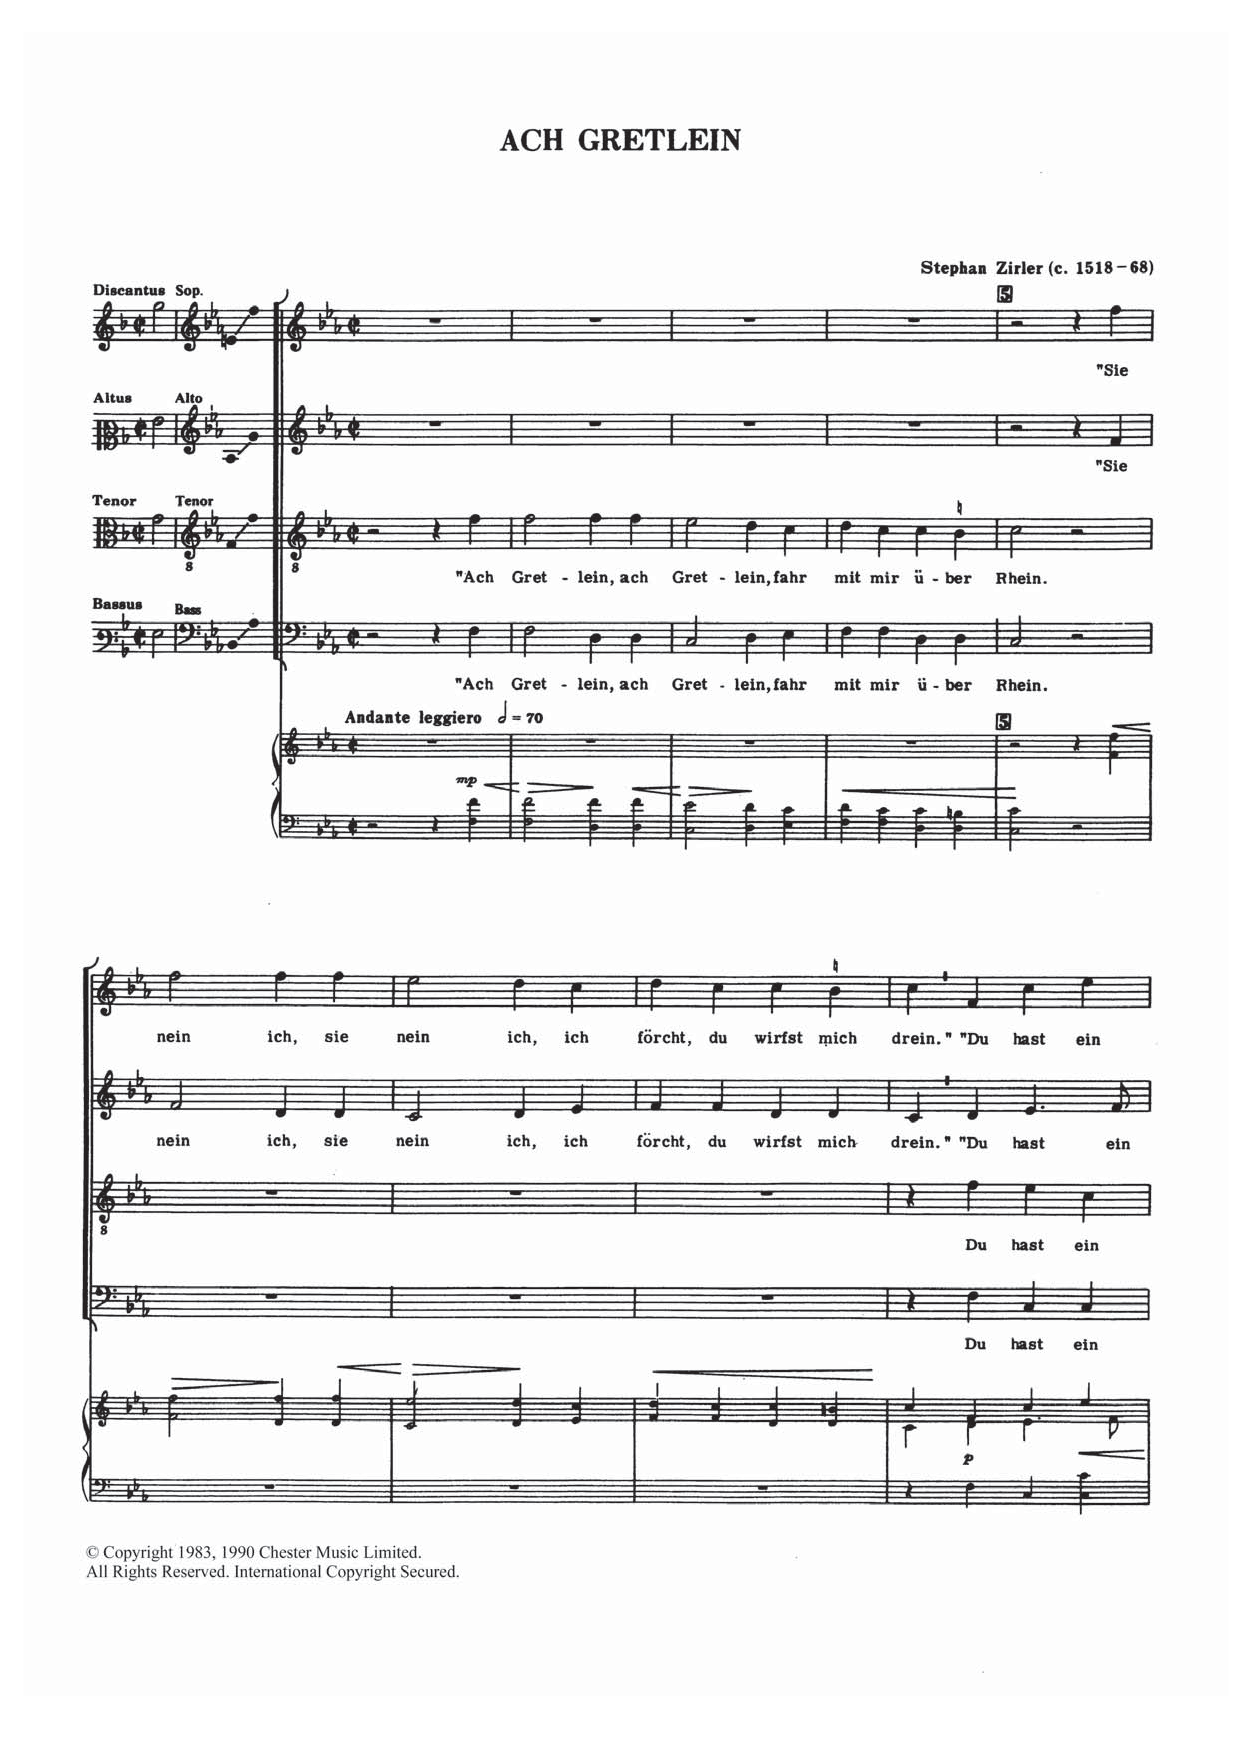 Stephan Zirler Ach Gretlein sheet music notes and chords arranged for Choir